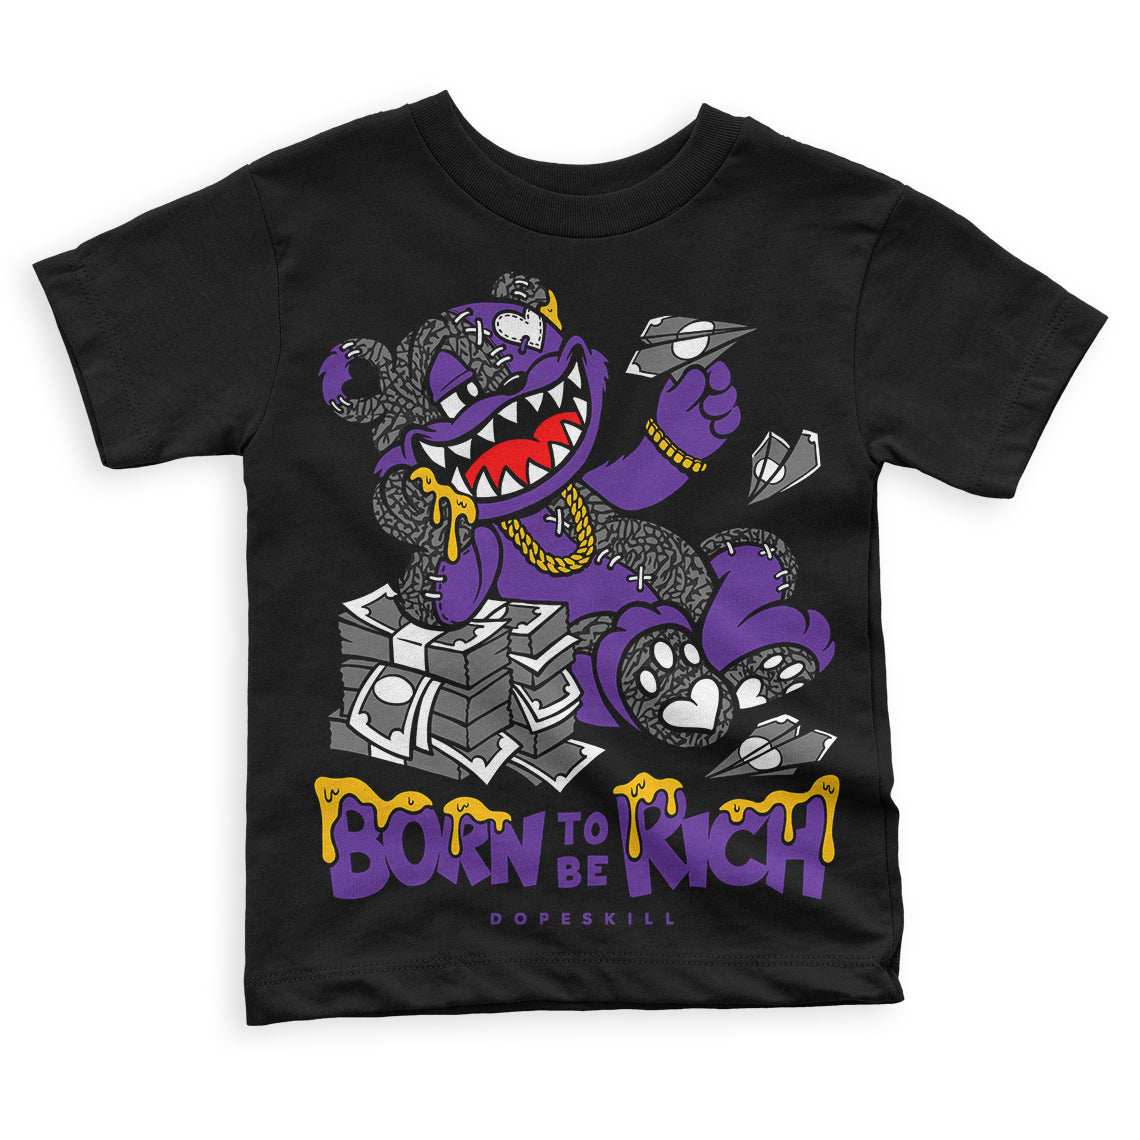 Jordan 3 Dark Iris DopeSkill Toddler Kids T-shirt Born To Be Rich Graphic Streetwear - Black